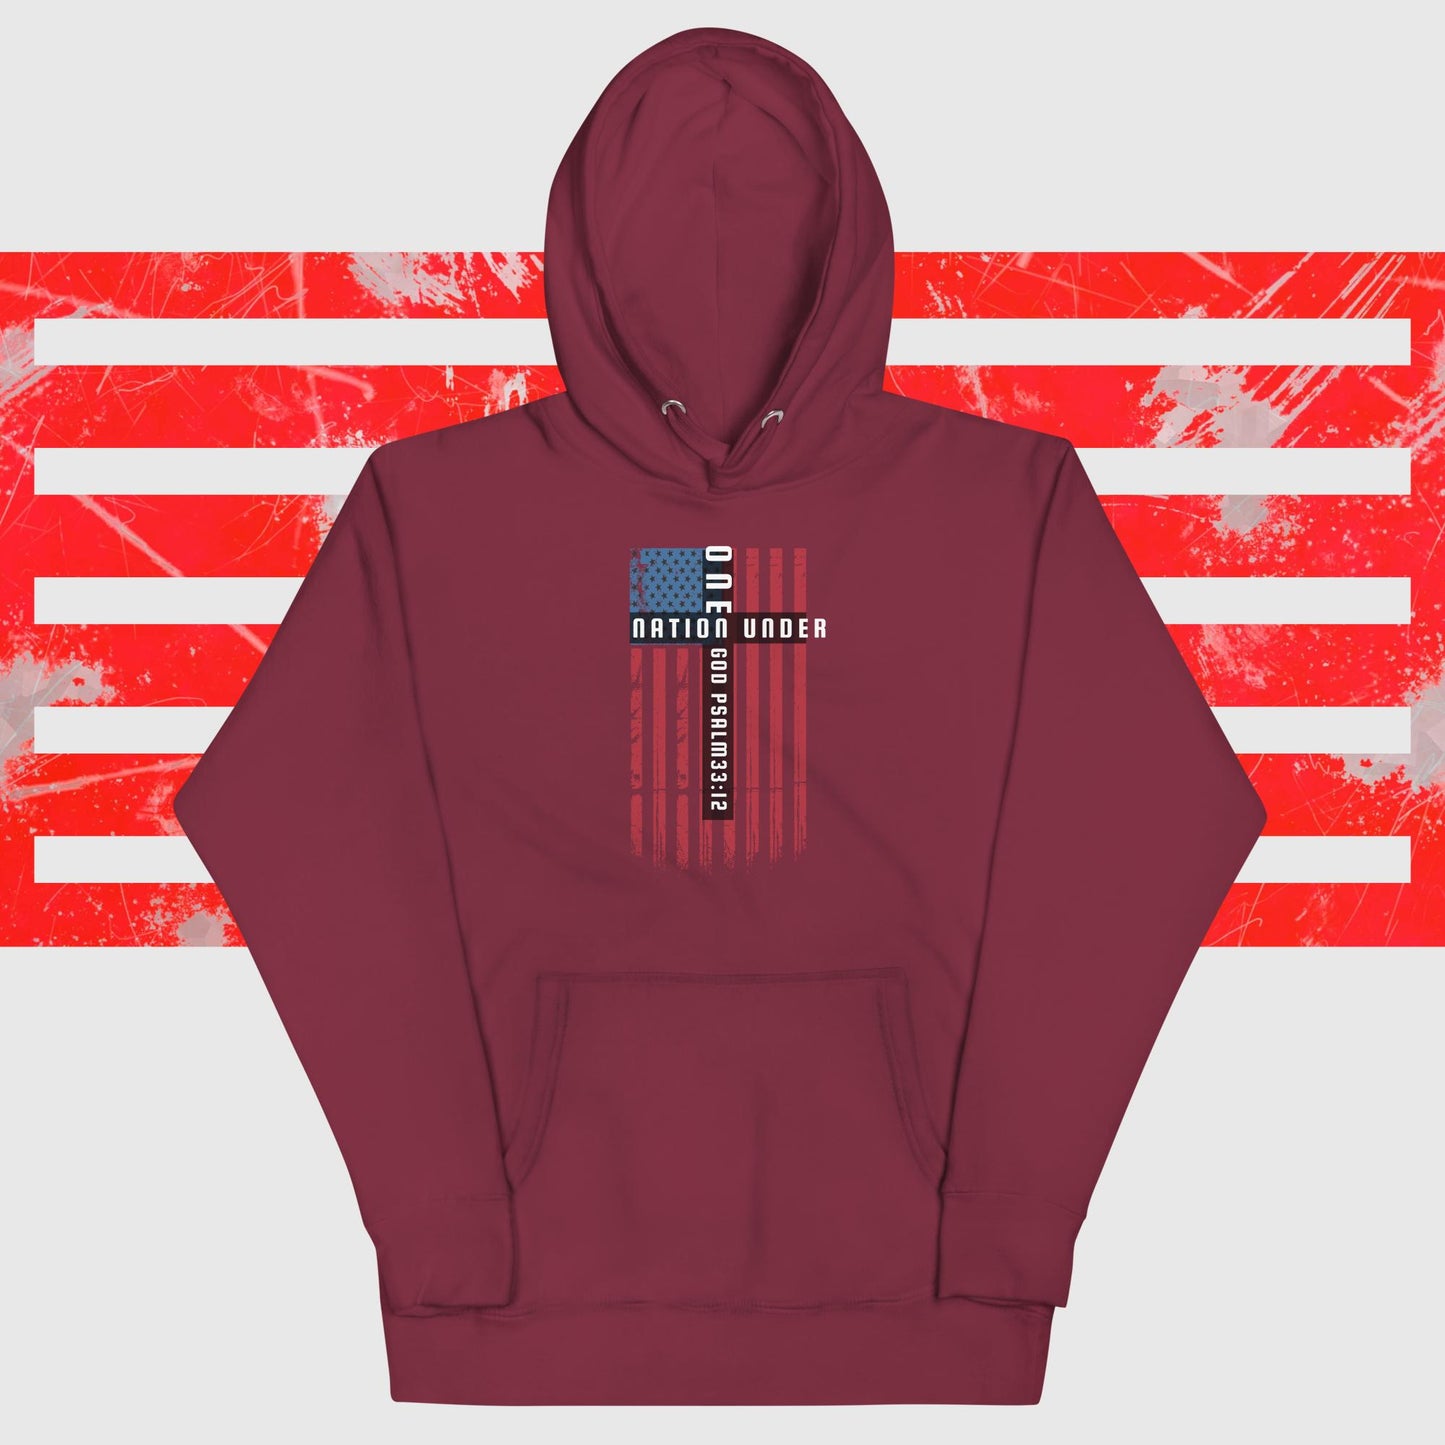 One Nation Under God Cross USA Flag hoodies